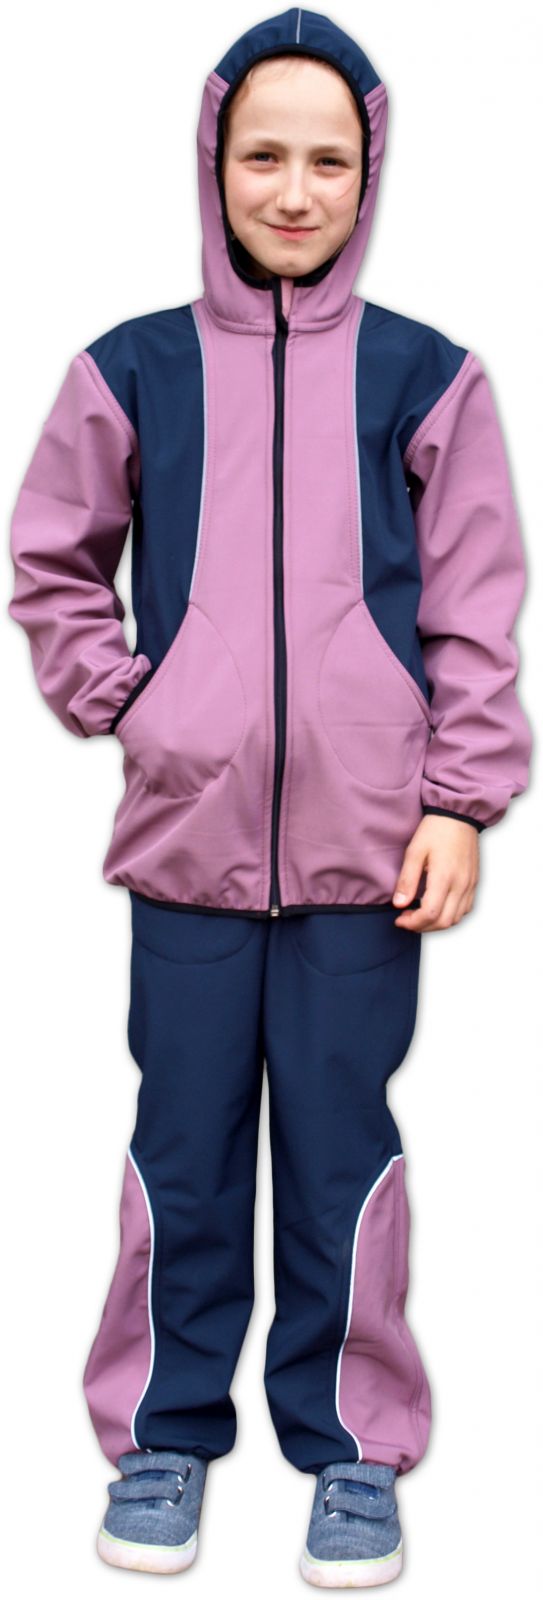 Softshell Jacke für Kinder, rosa/dunkelblau, Gr. 98/104